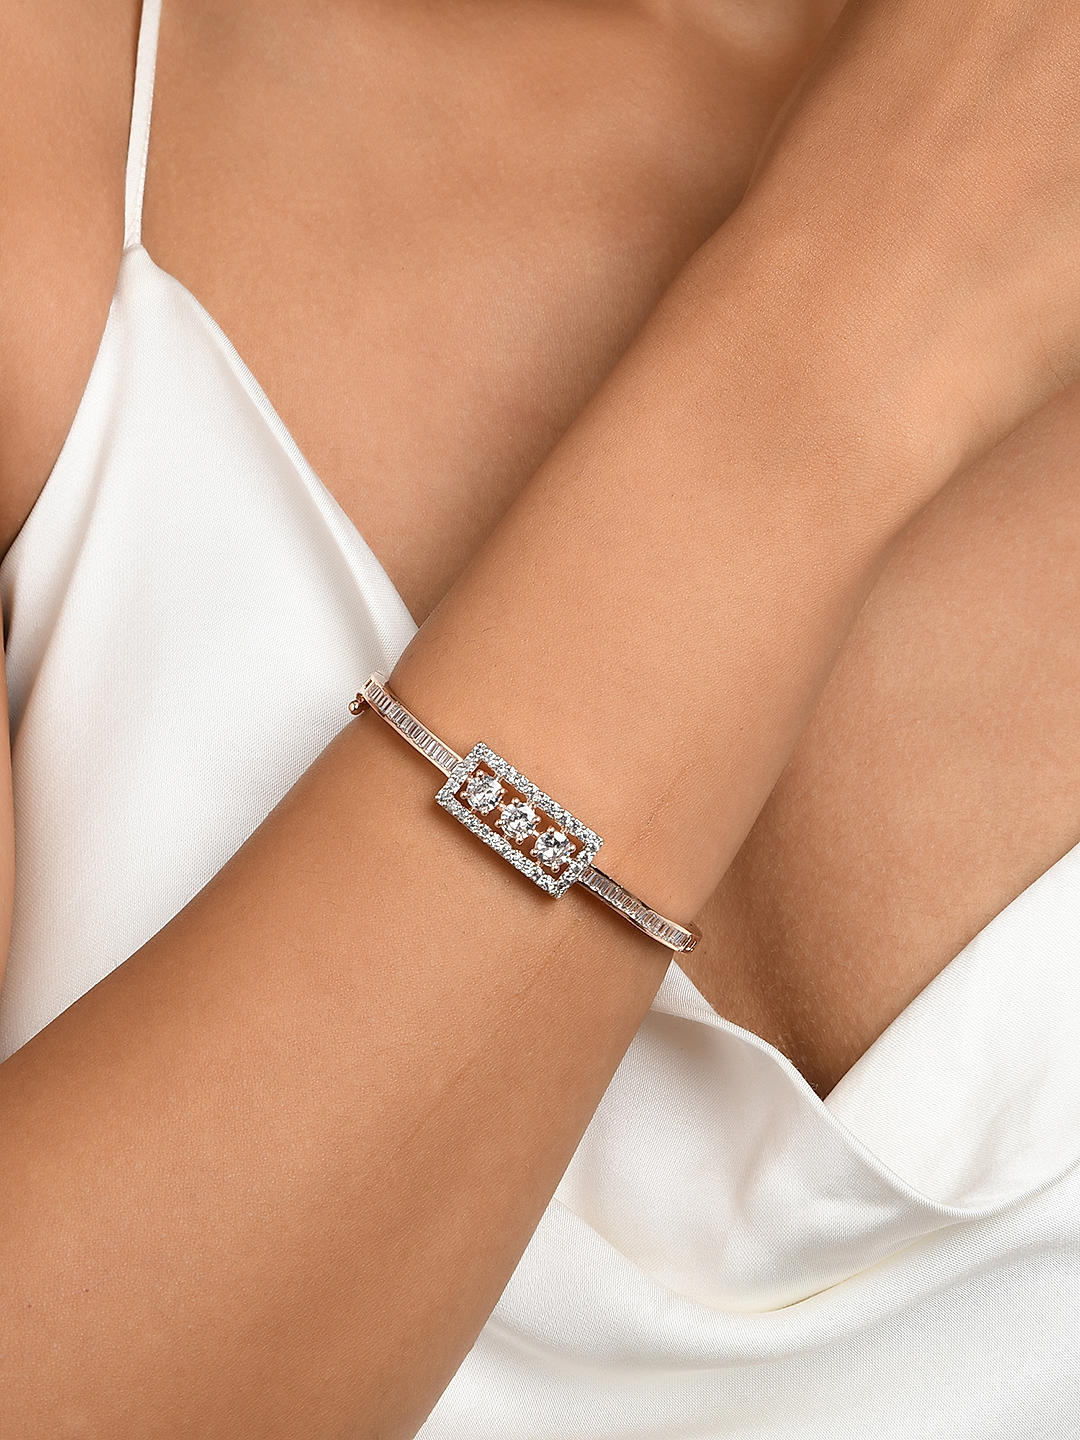 Shop Now! White Gold Diamond Bracelets For Women Online